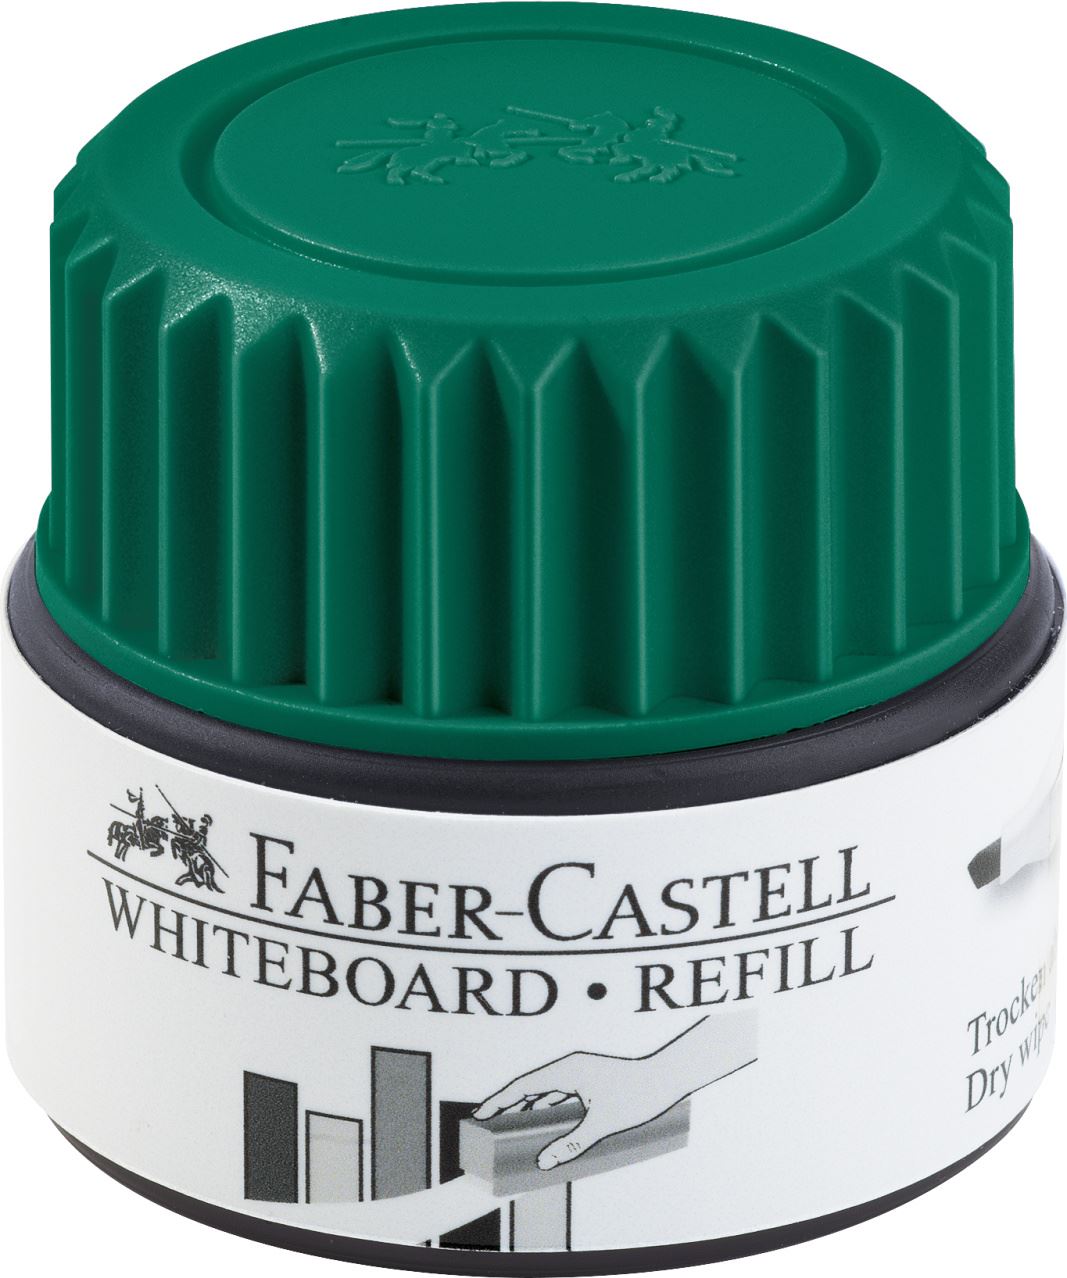 Faber-Castell - Ανταλλακτικό μελάνι ασπροπίνακα1584 πράσινο